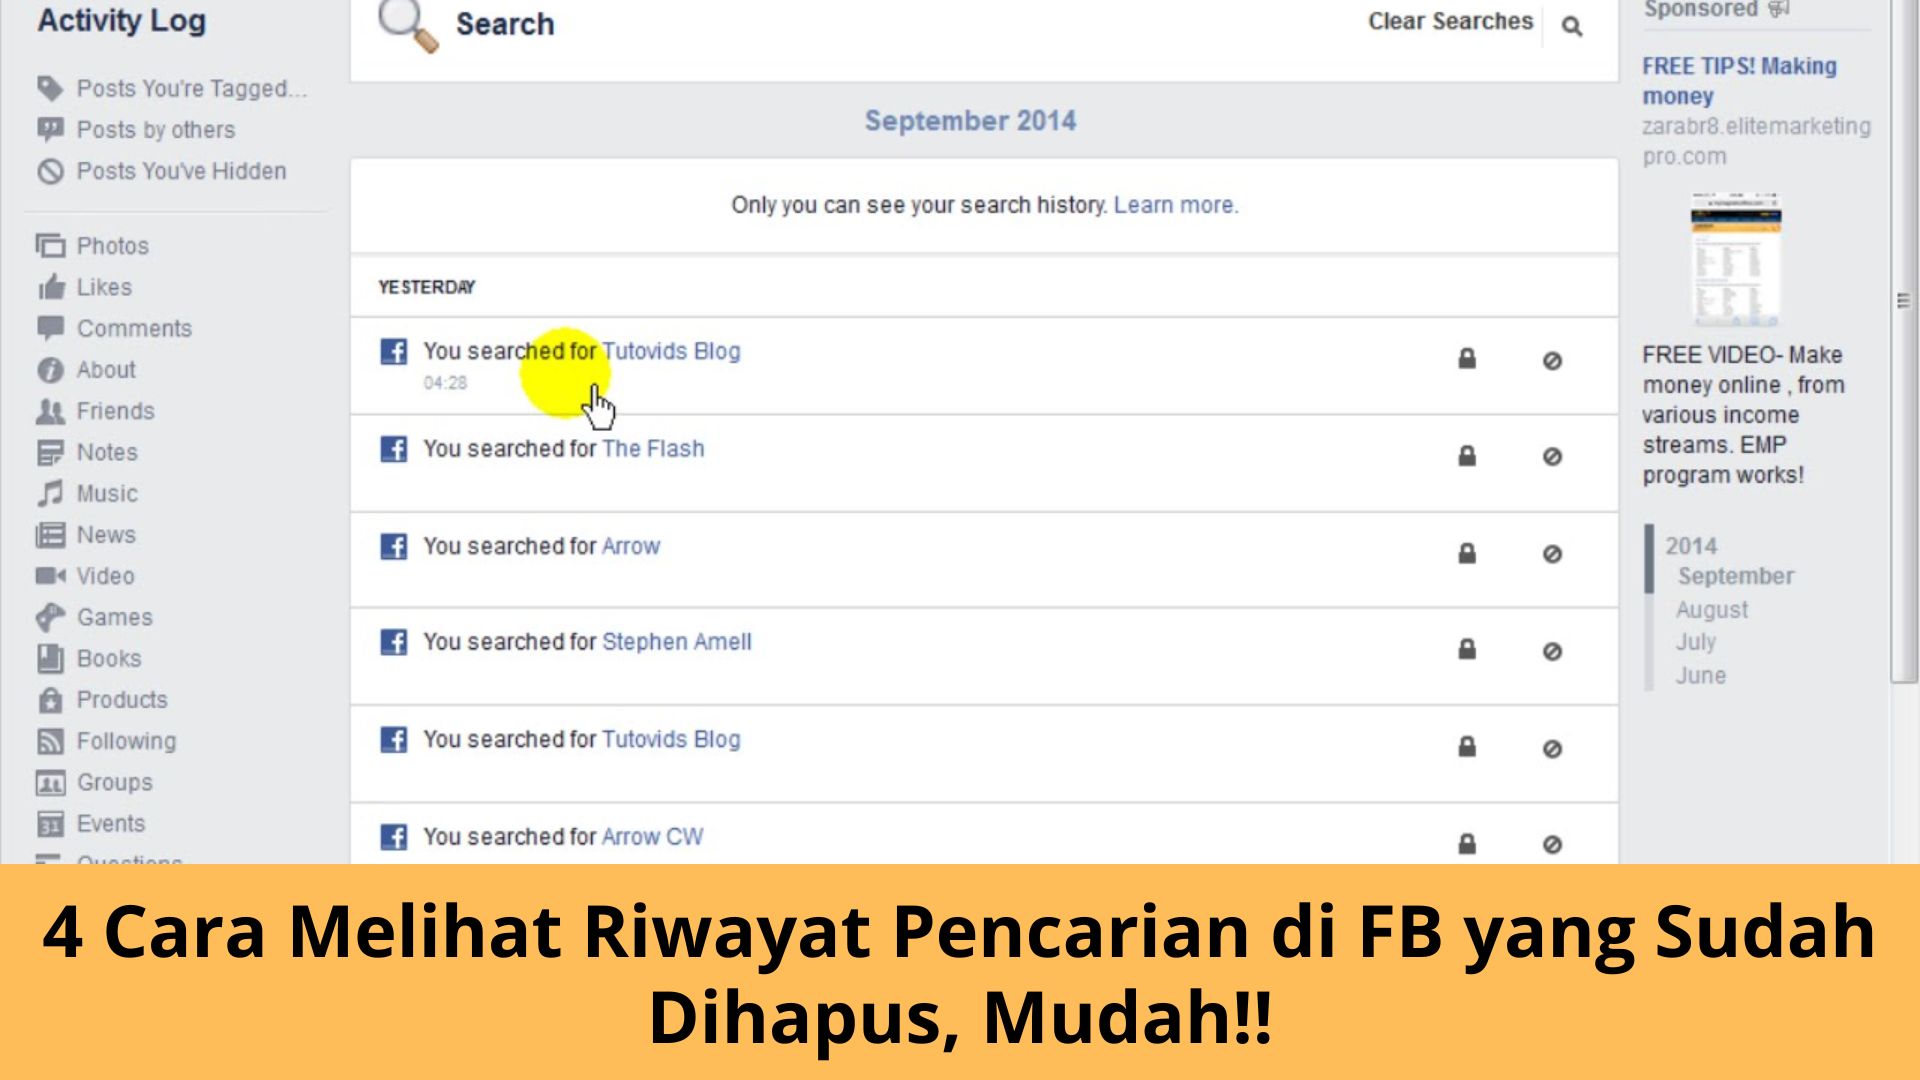 Cara Melihat Riwayat Pencarian di FB yang Sudah Dihapus